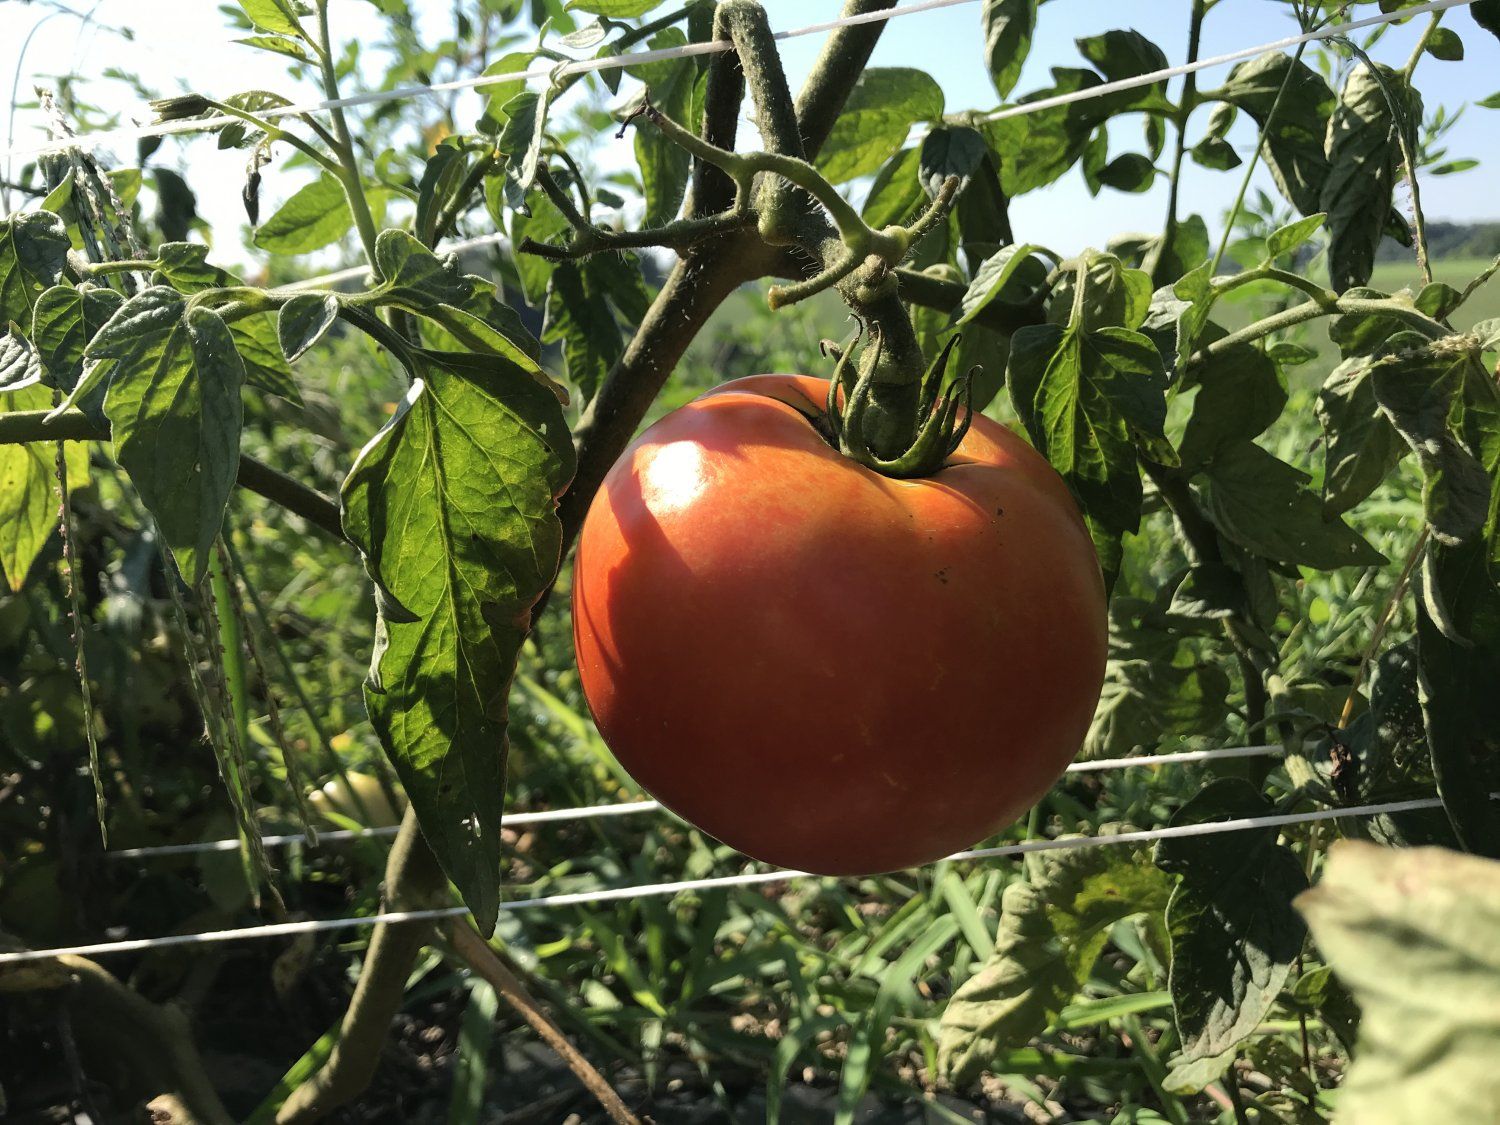 Tomatoes and Corn say Summer